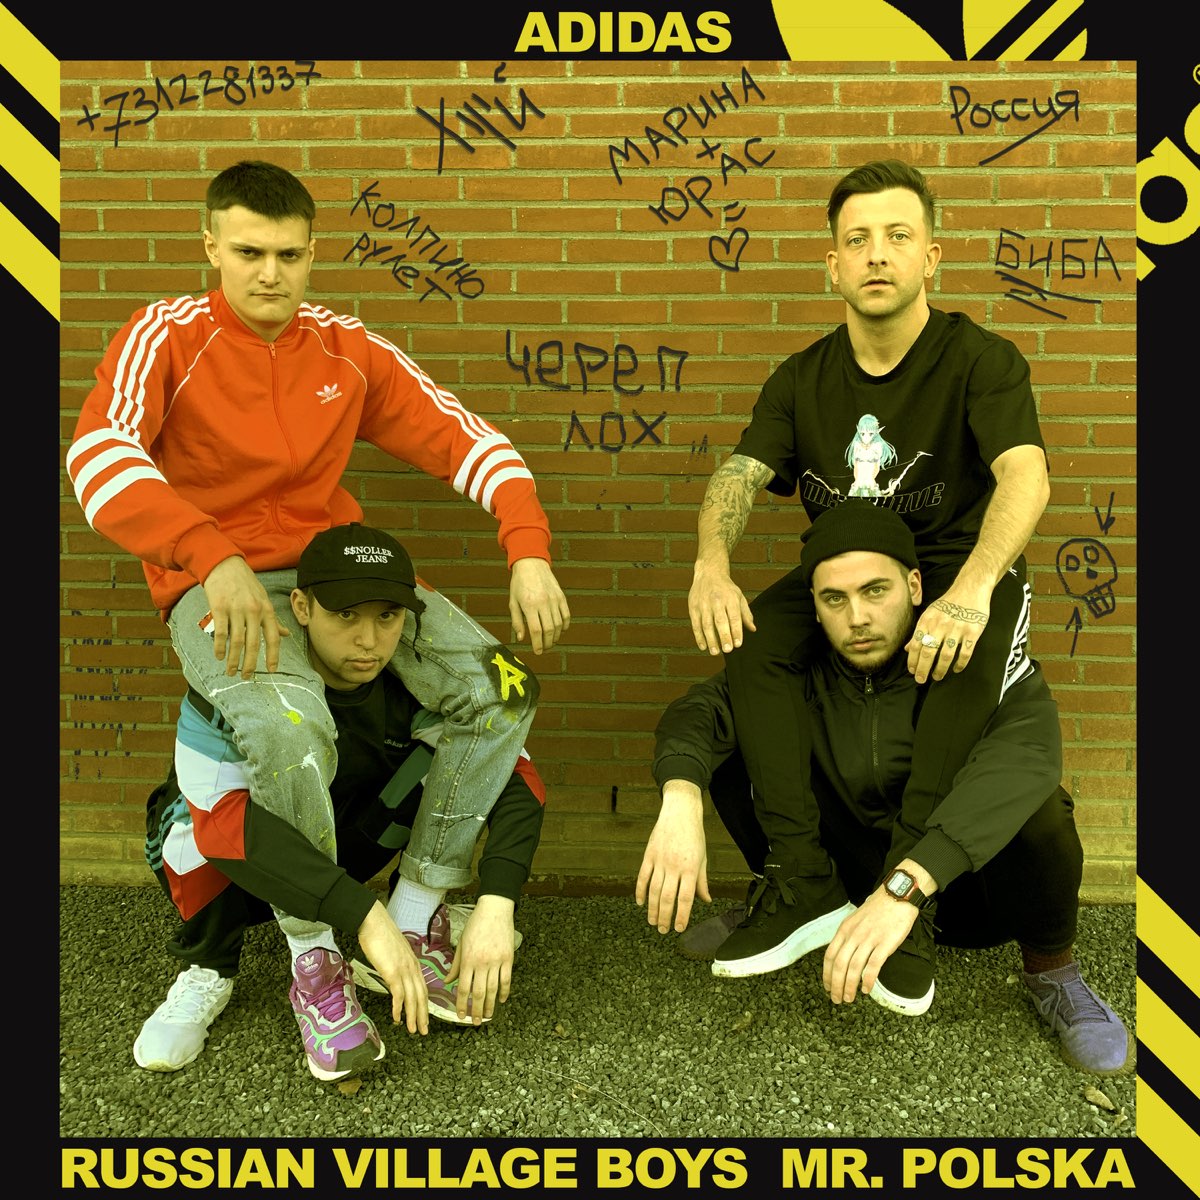 Adidas - Single by Russian Village Boys & Mr. Polska on Apple Music